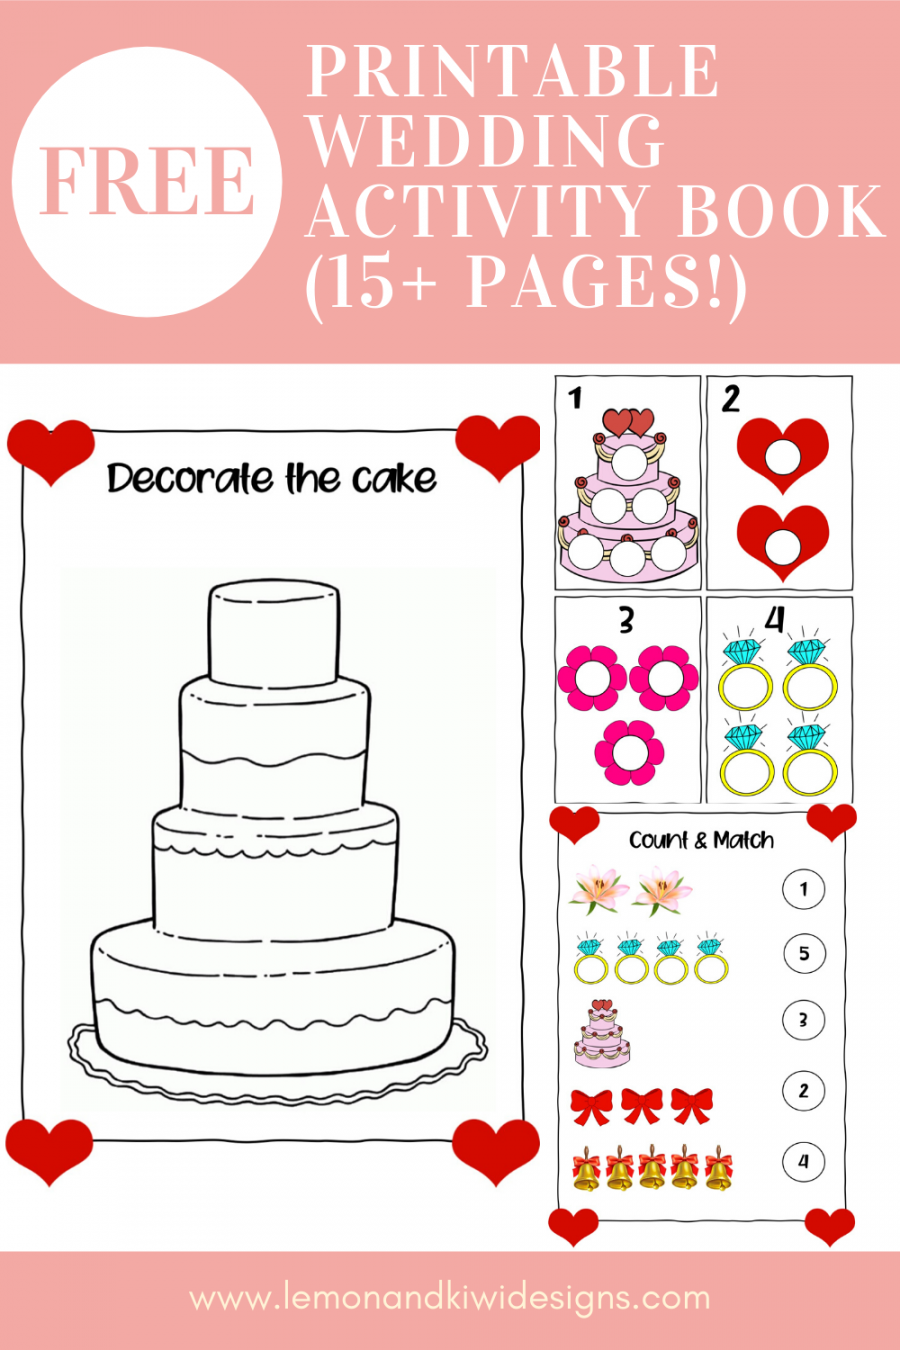 Pin on Wedding Printables - FREE Printables - Printable Free Wedding Activity Book